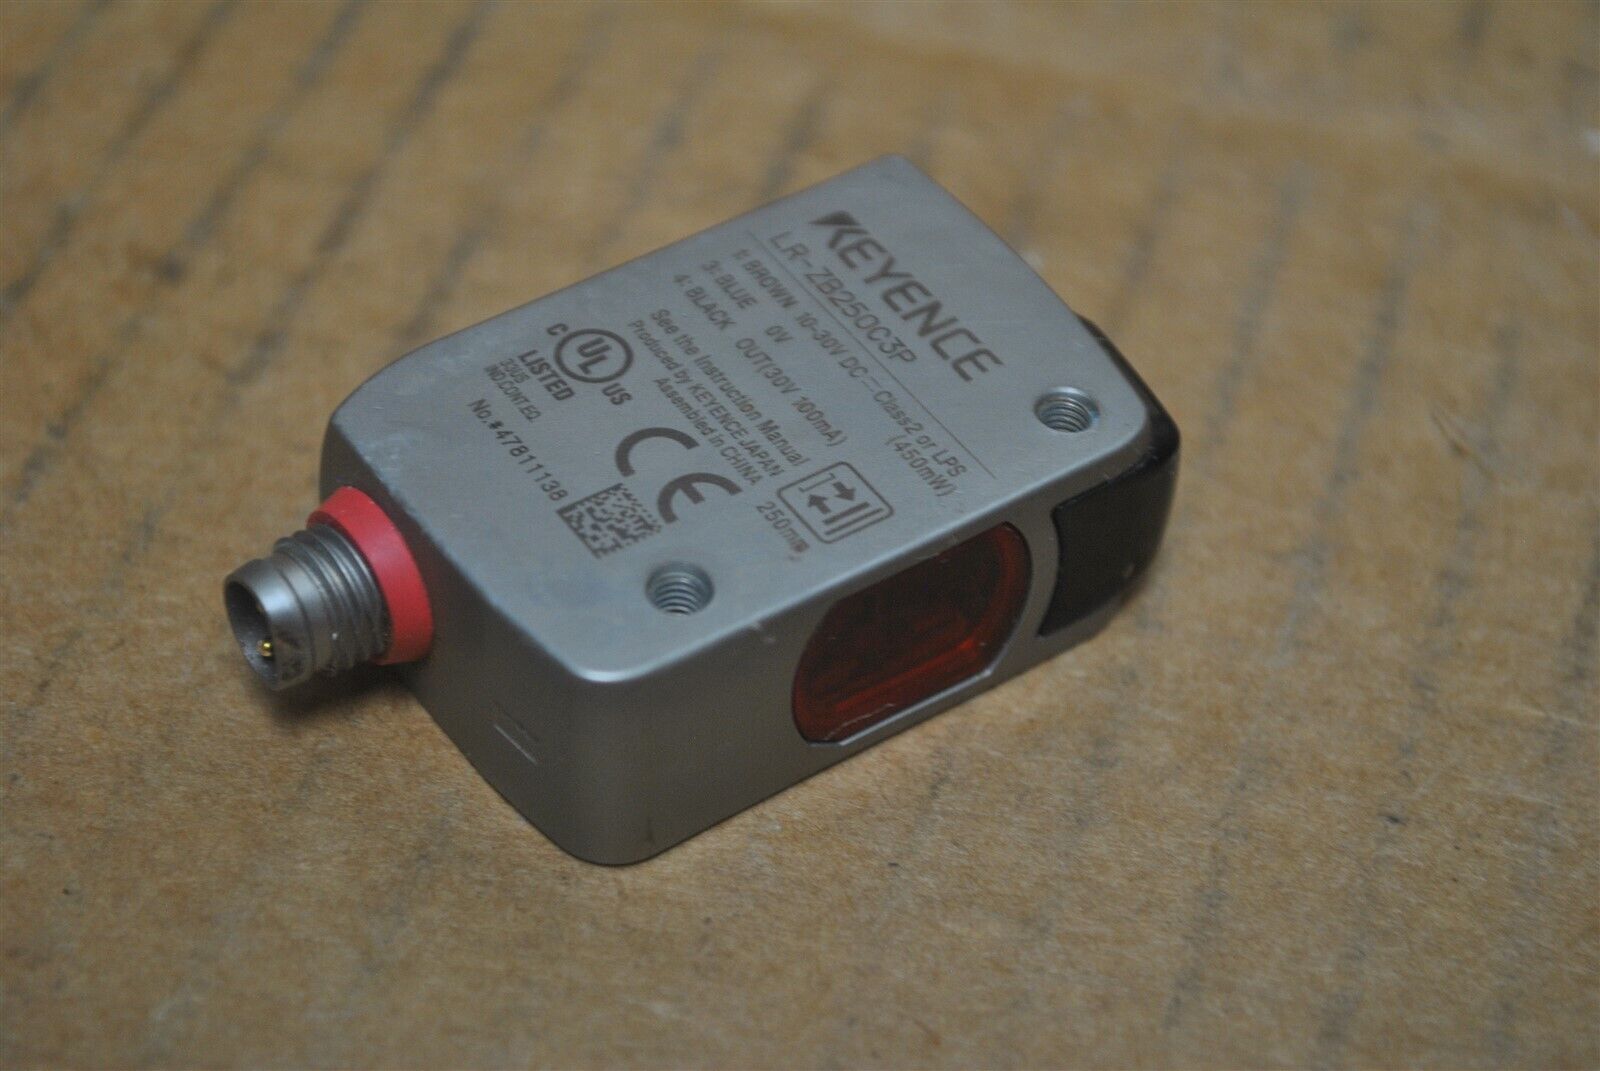 Keyence Laser Sensor Part No. LR-ZB250C3P